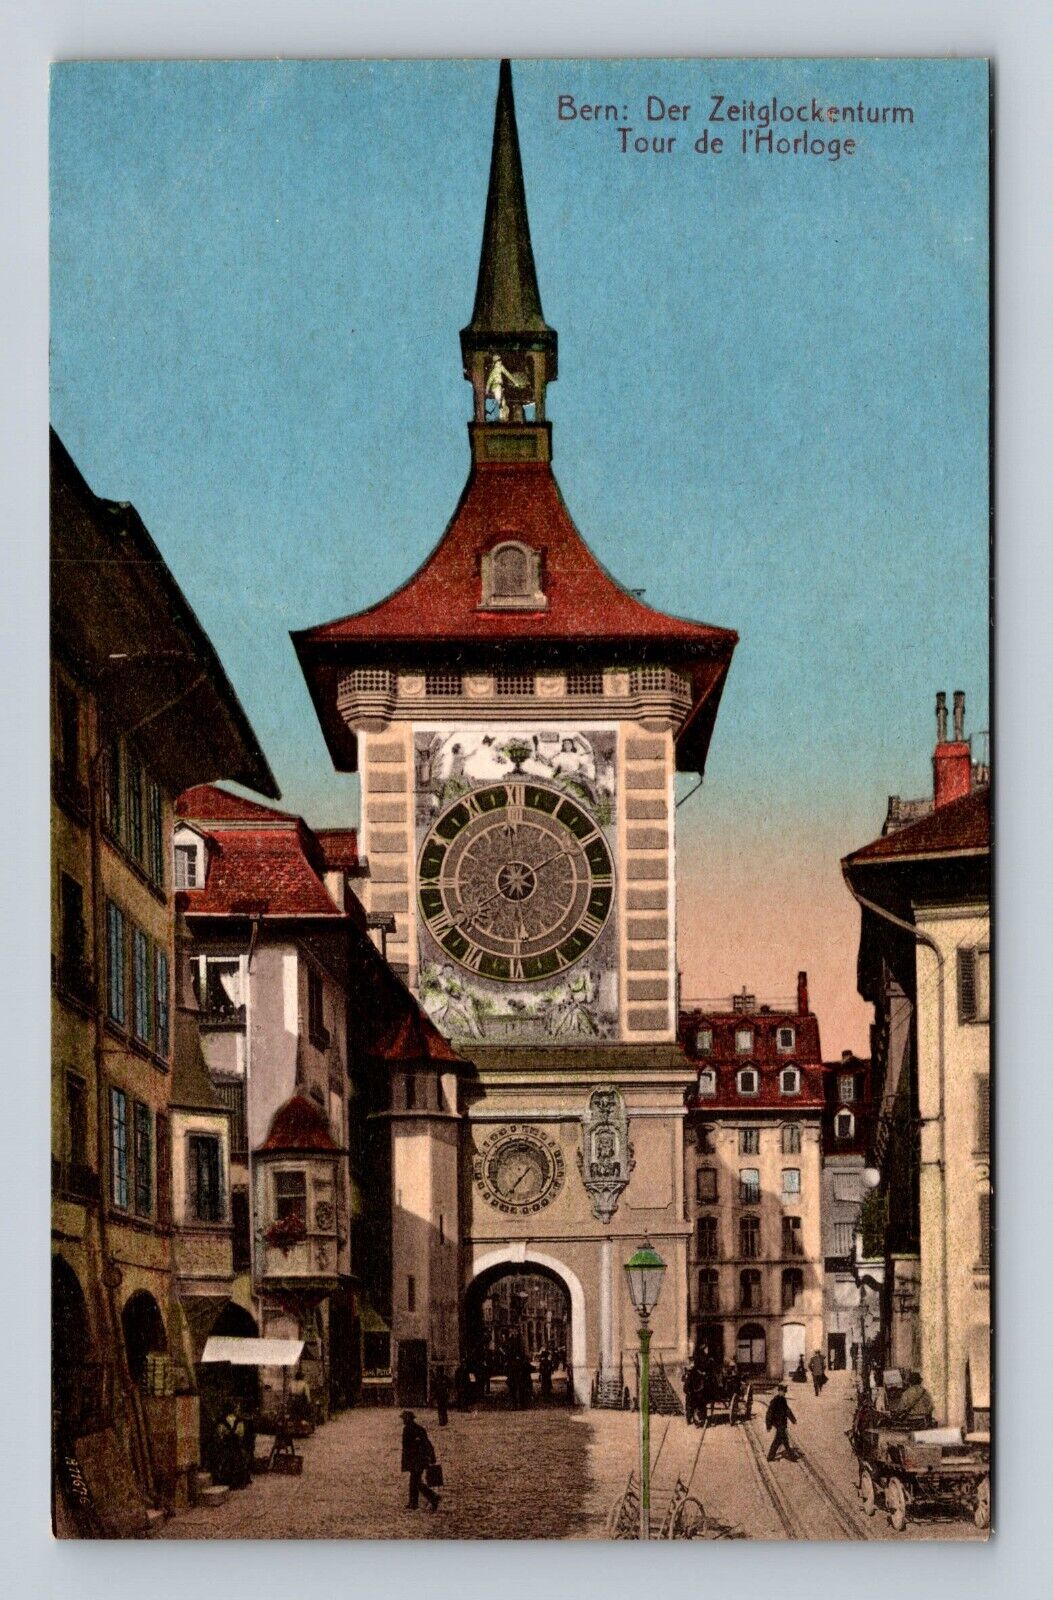 Bern The Clock Tower Tour de l'Horlogen Zytglogge Switzerland Postcard